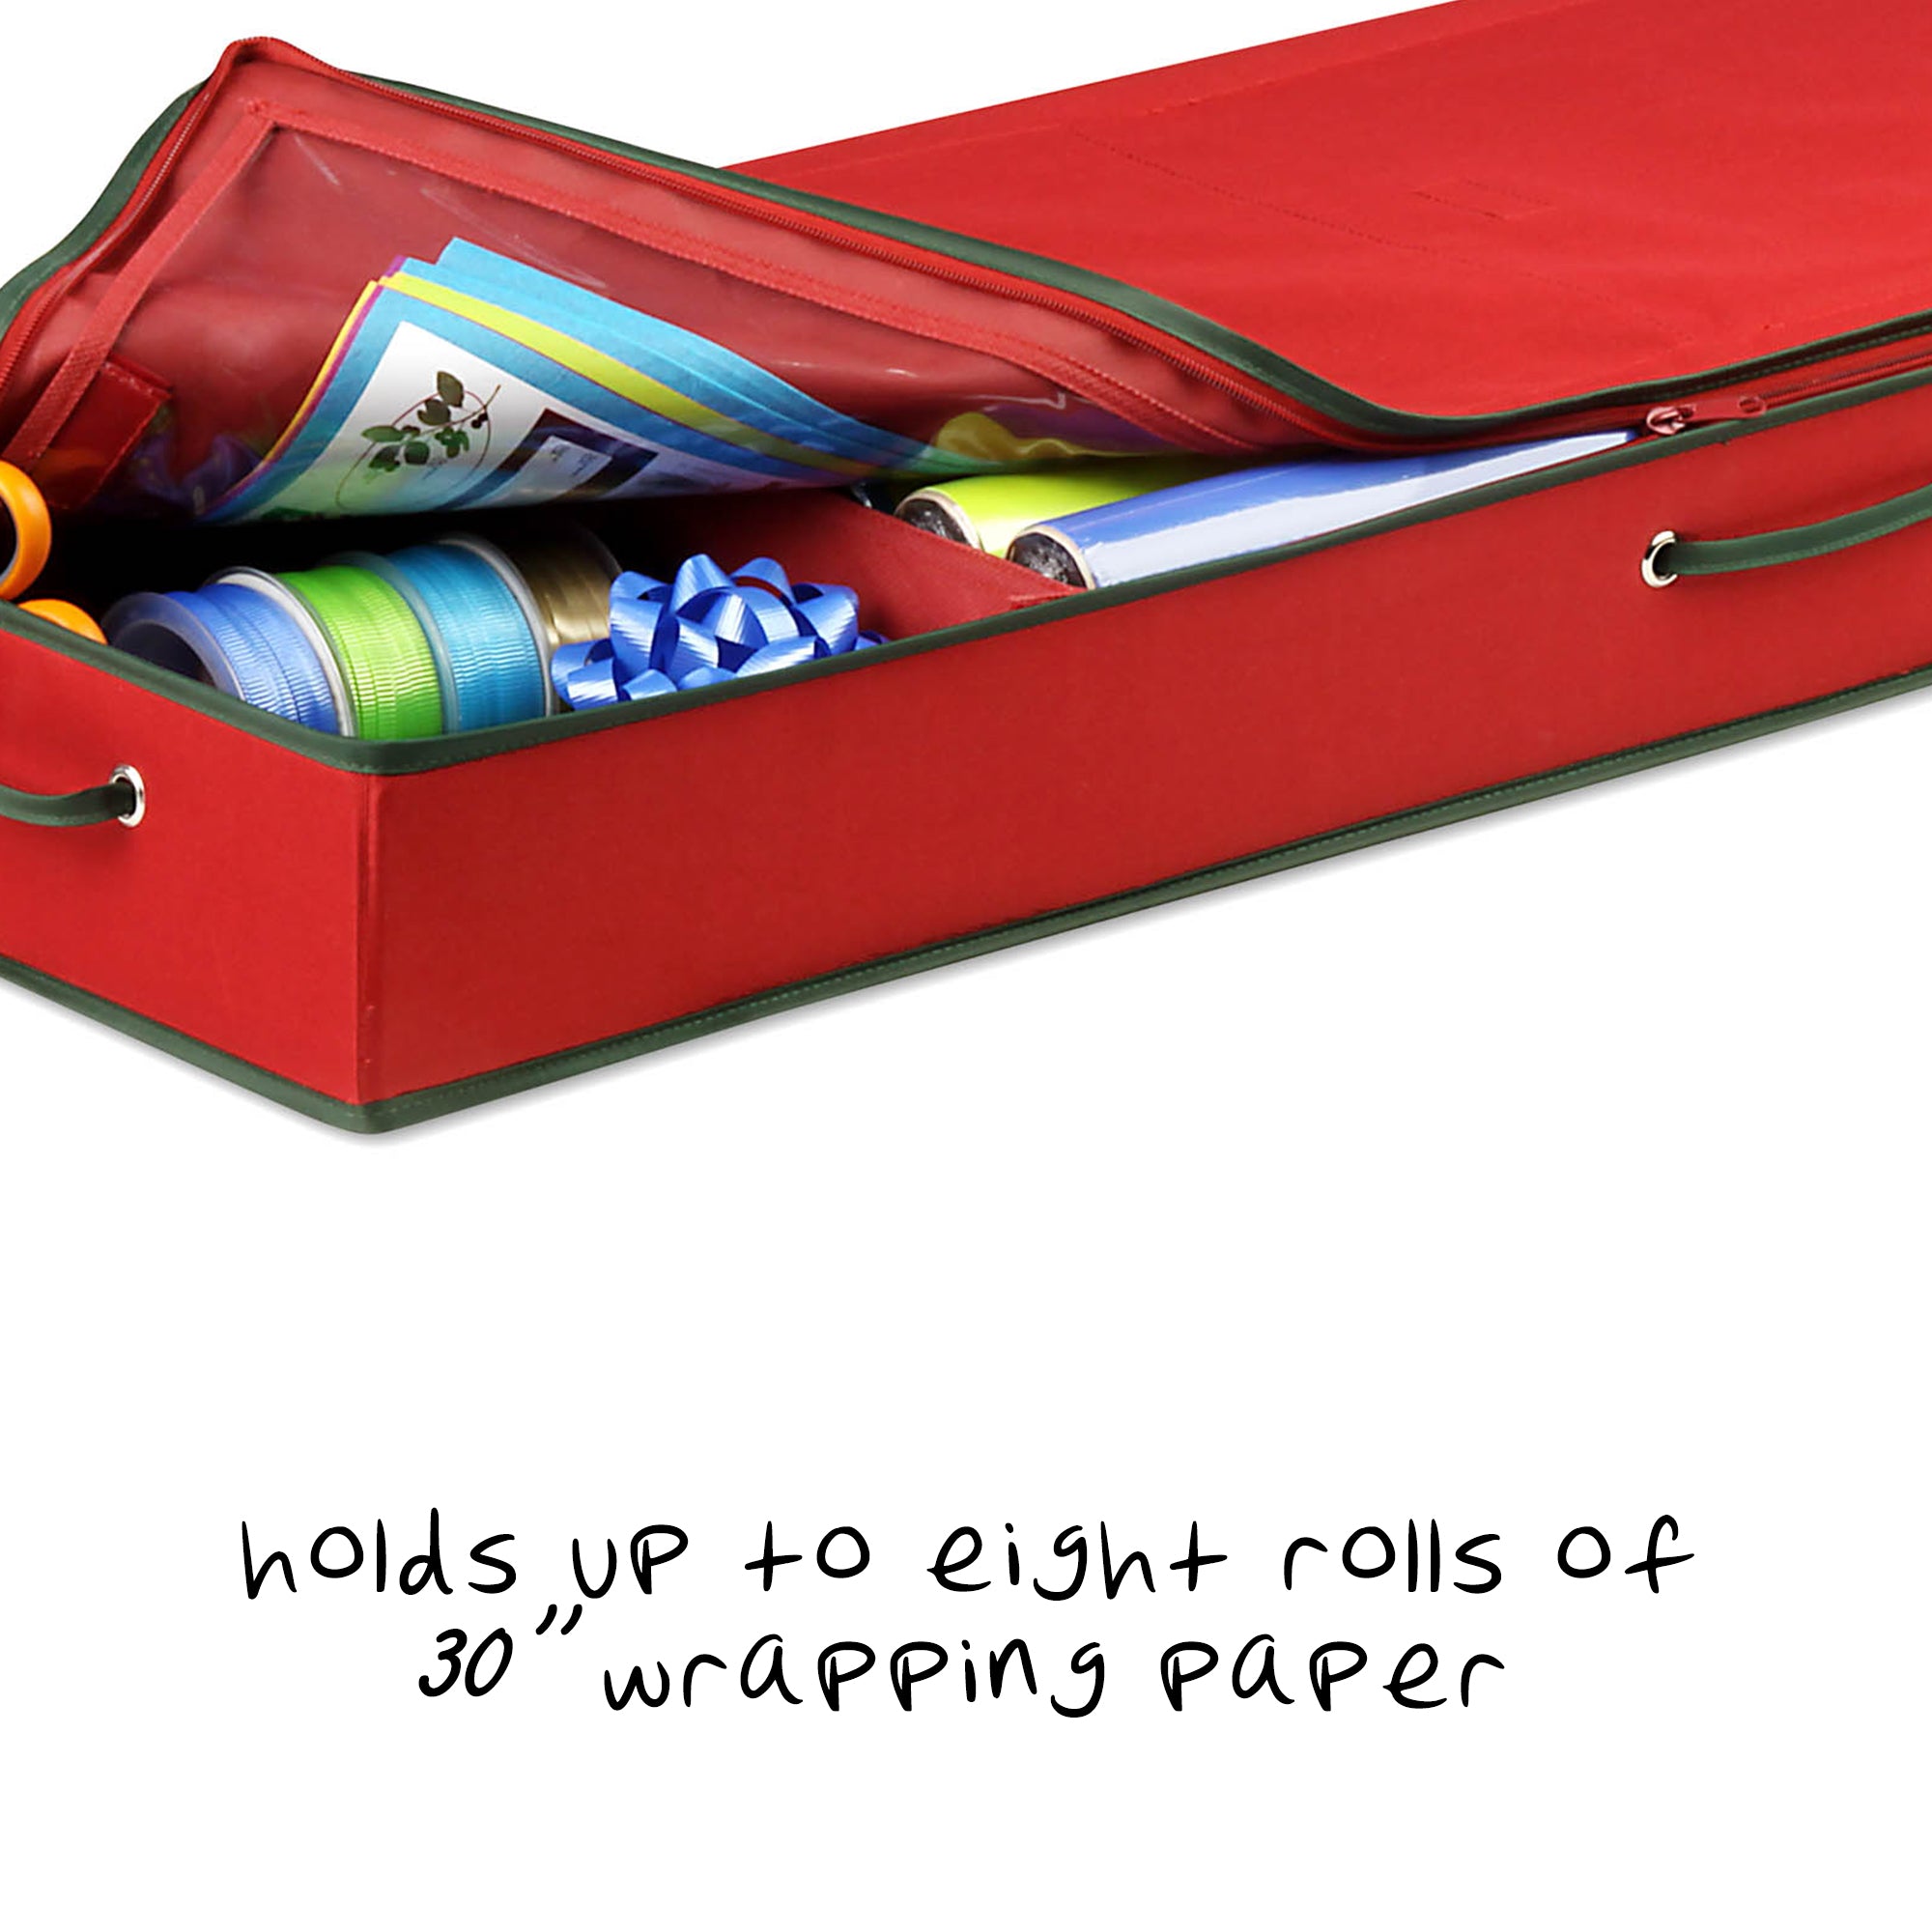 Gift Wrap Storage Organizer